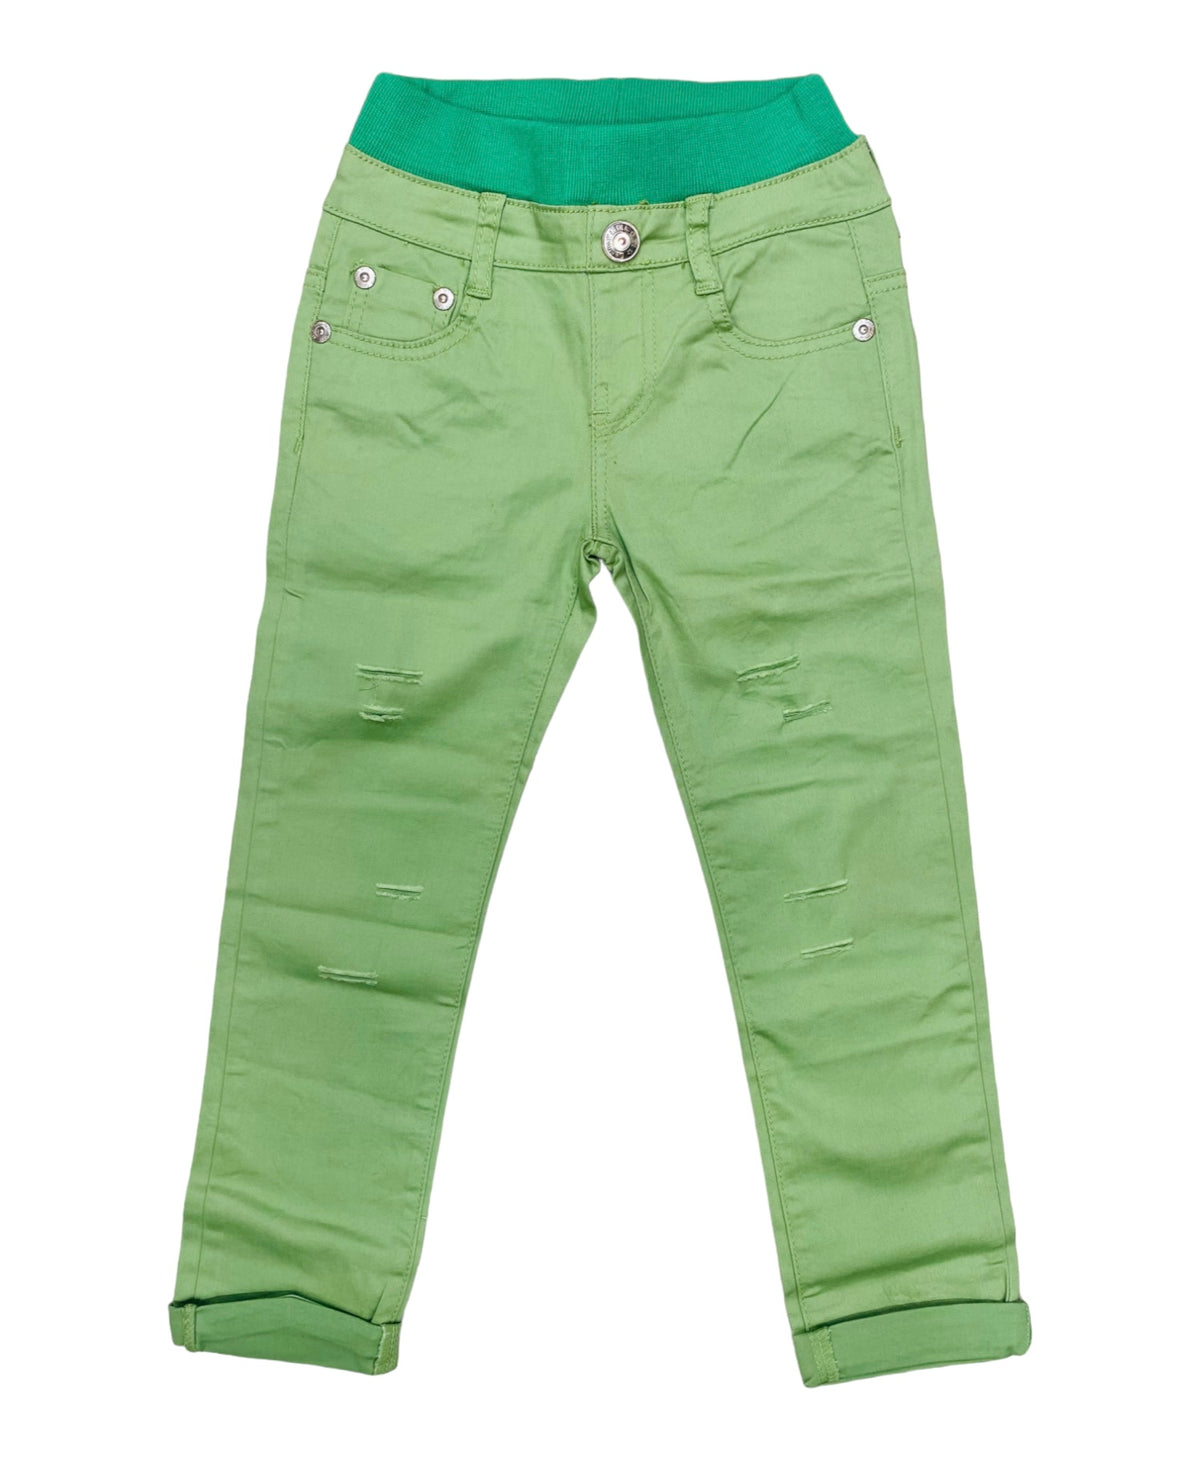 Green Cotton Jeans Pant